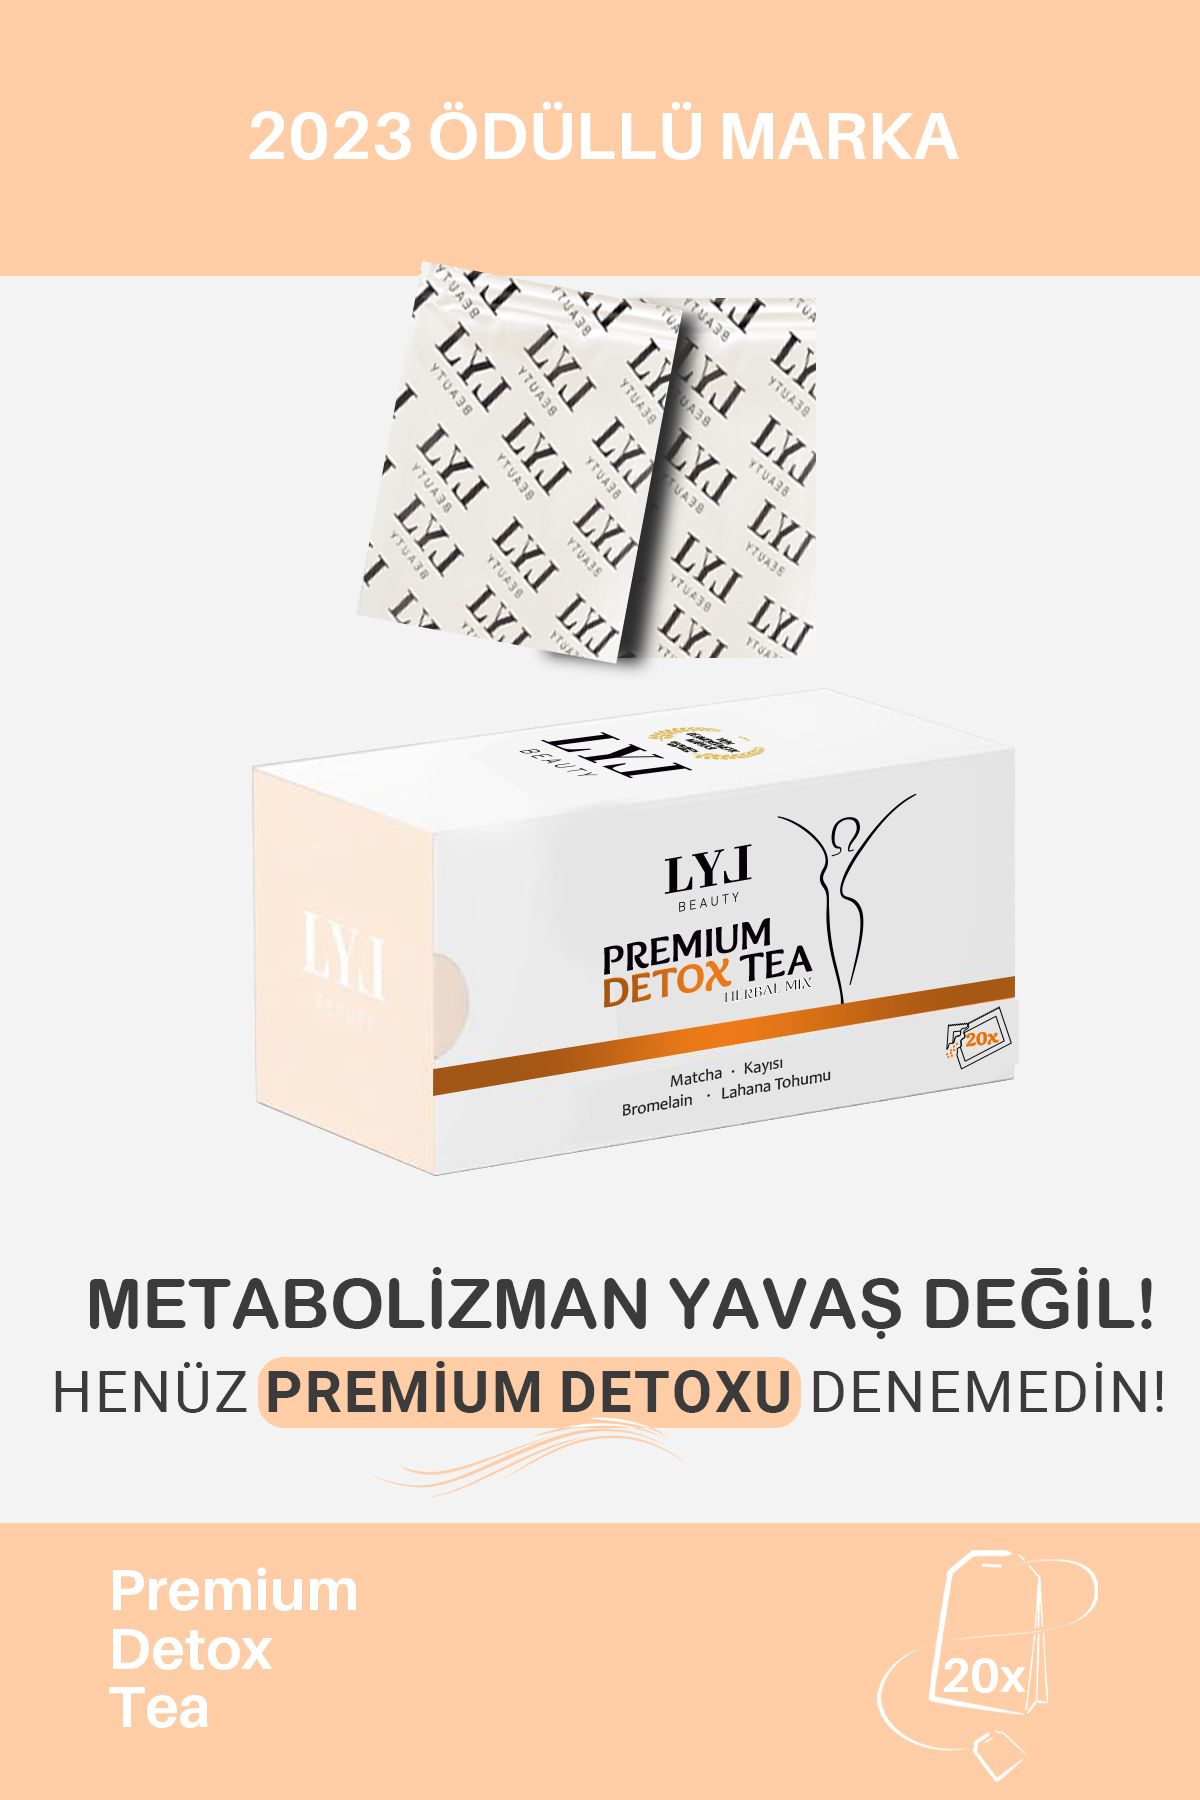 LYL BEAUTY Bromelain-lahana-matcha-kayısı Premium Detox Çayı--kilo Ve Ödem Atıcı